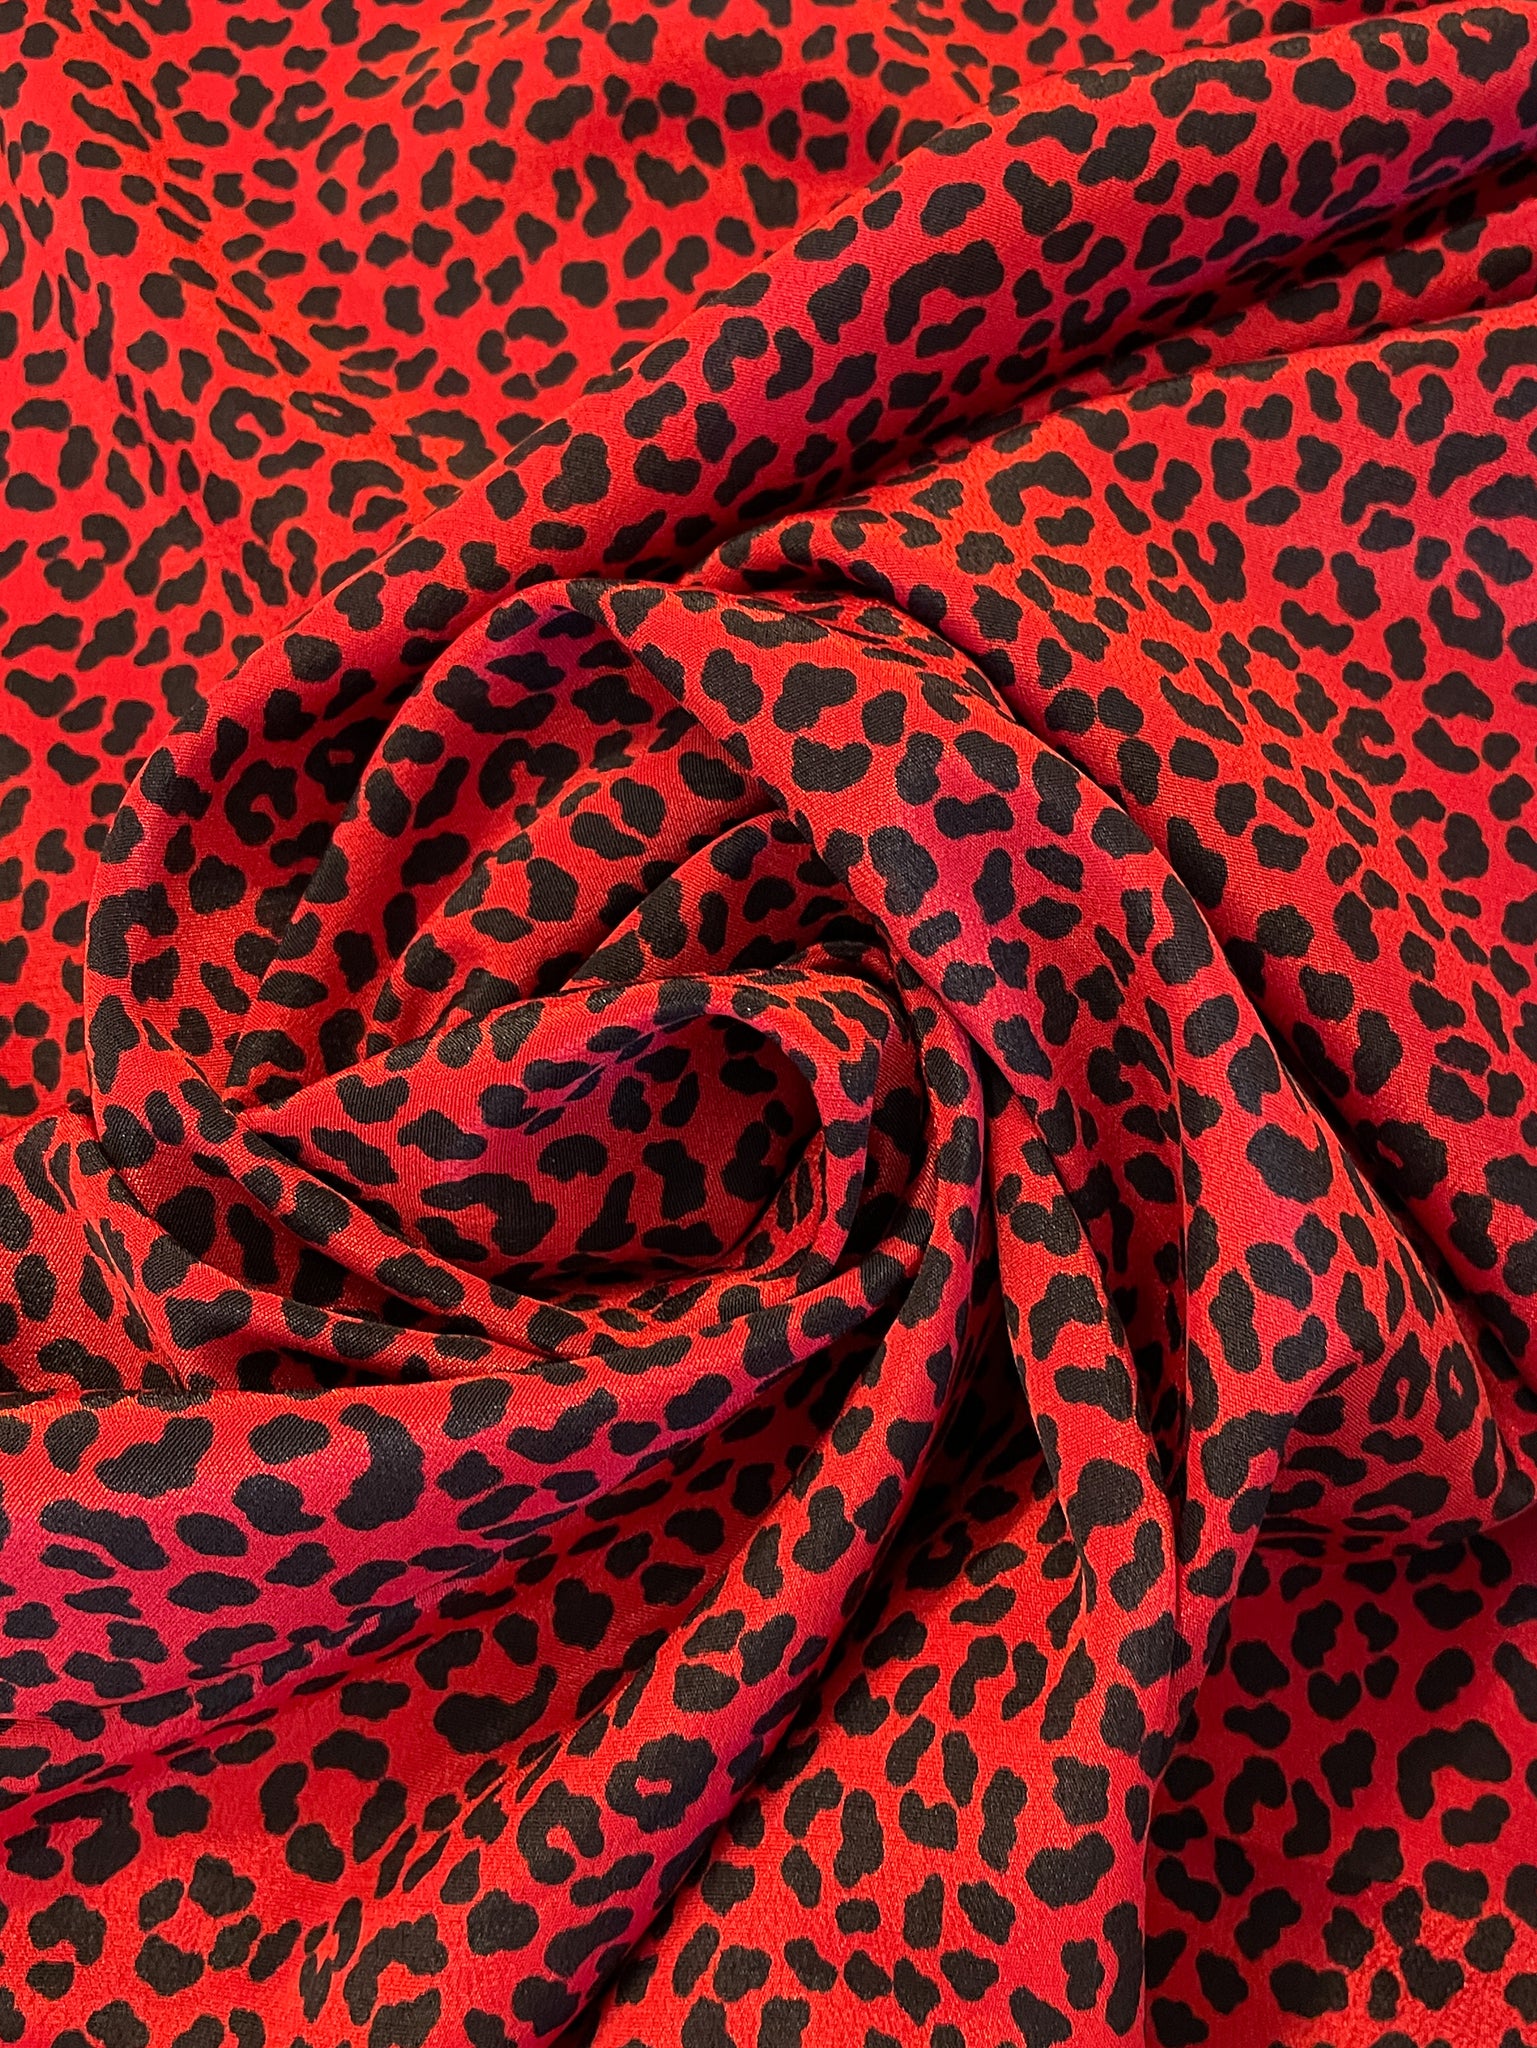 SALE Polyester Vintage - Red and Black Leopard Print